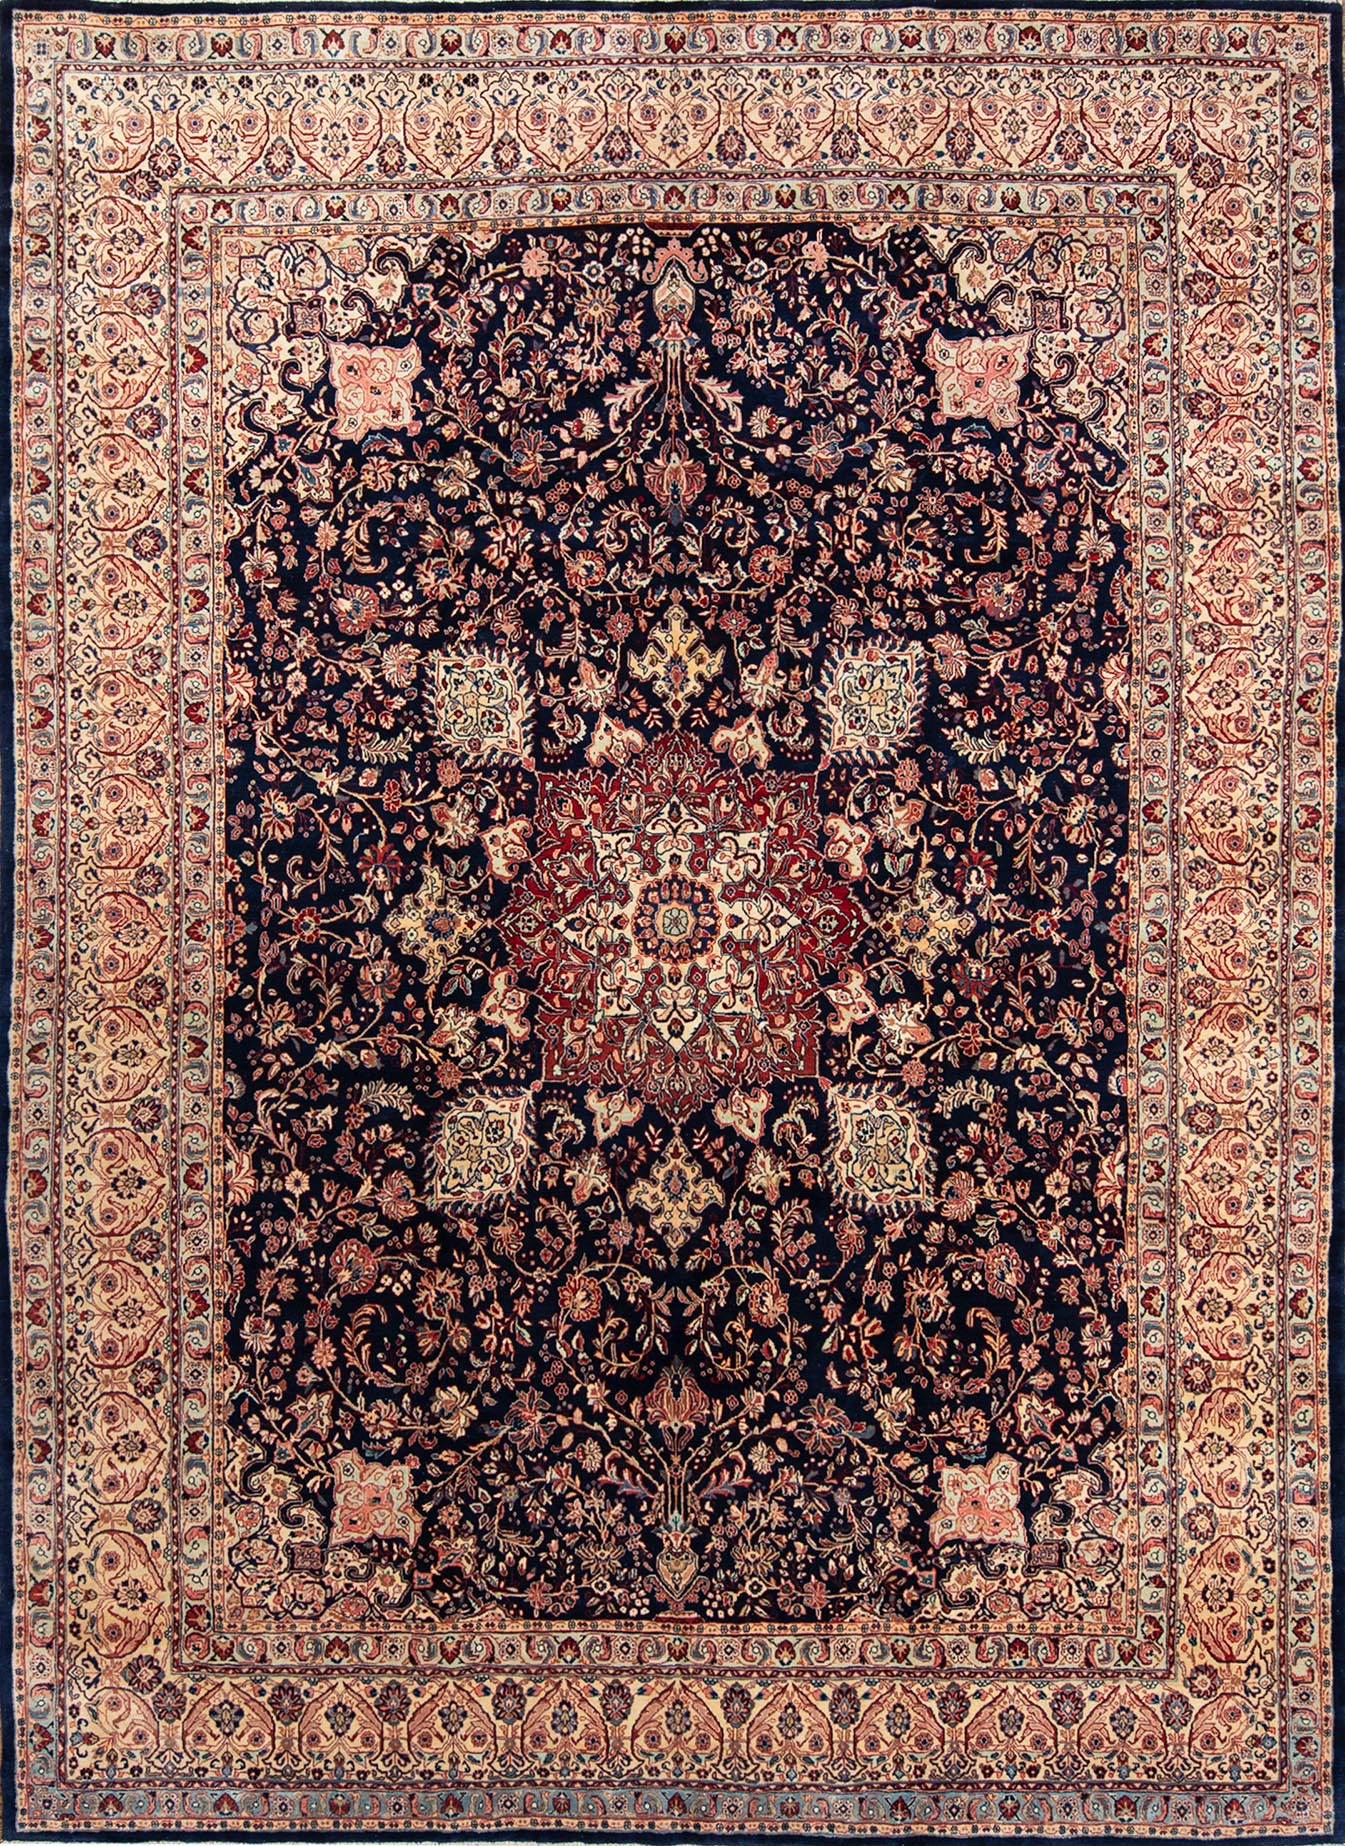 Persian navy blue area rug. Handmade Persian Sarouk floral wool area rug. Rug size 10x13.7.